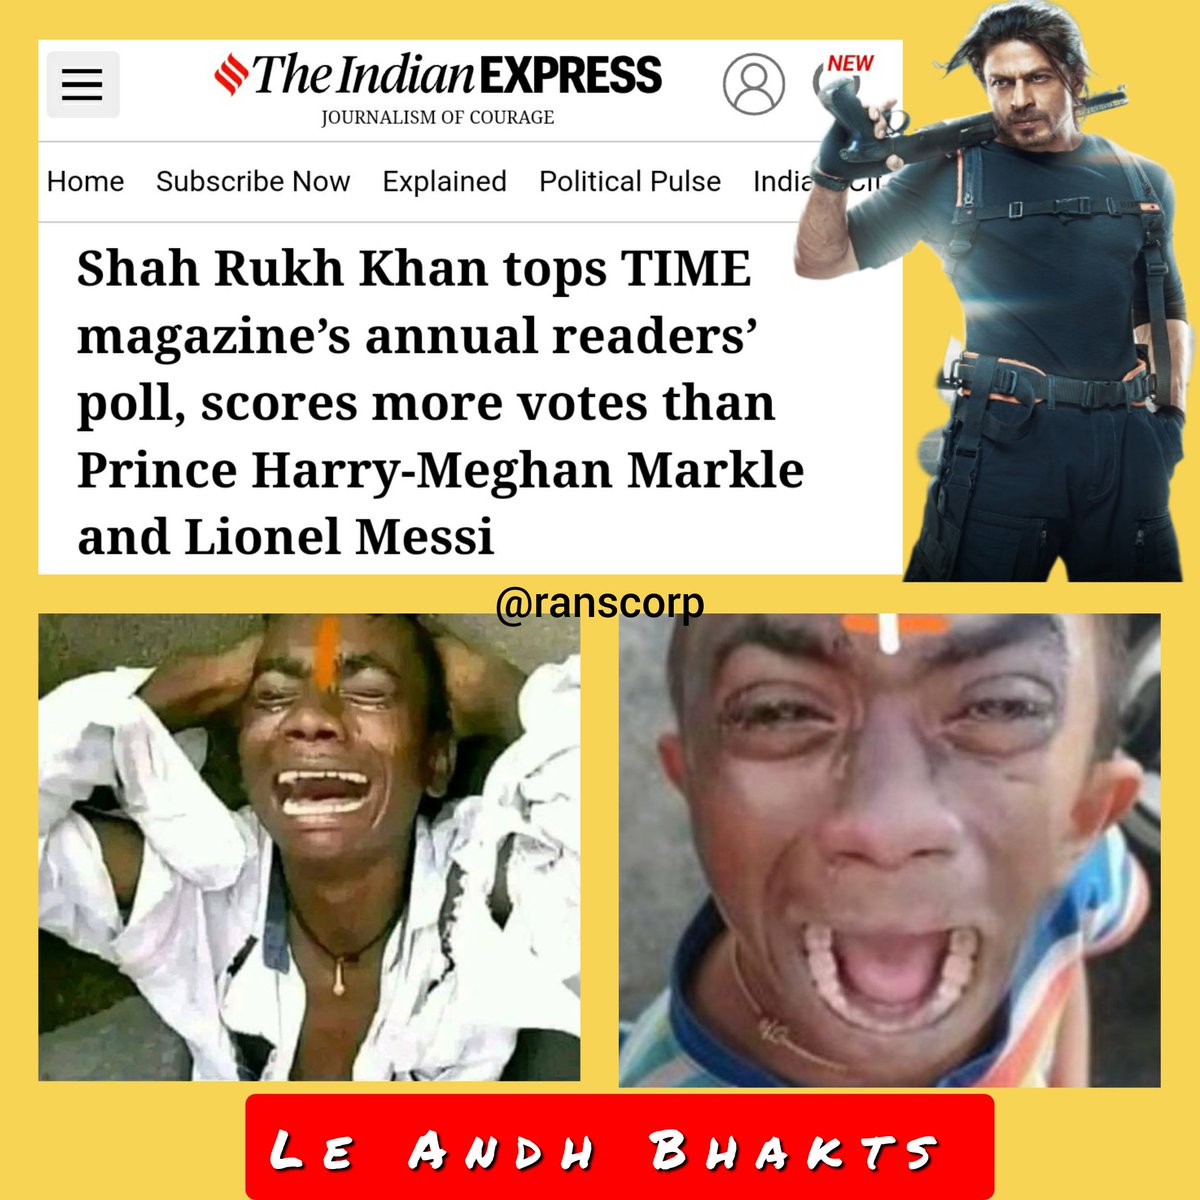 #SRK #shahrukhkhan #TIME100 #AndhBhakts #Bhakts #BoycottGang #BoycottBollywoodMovies